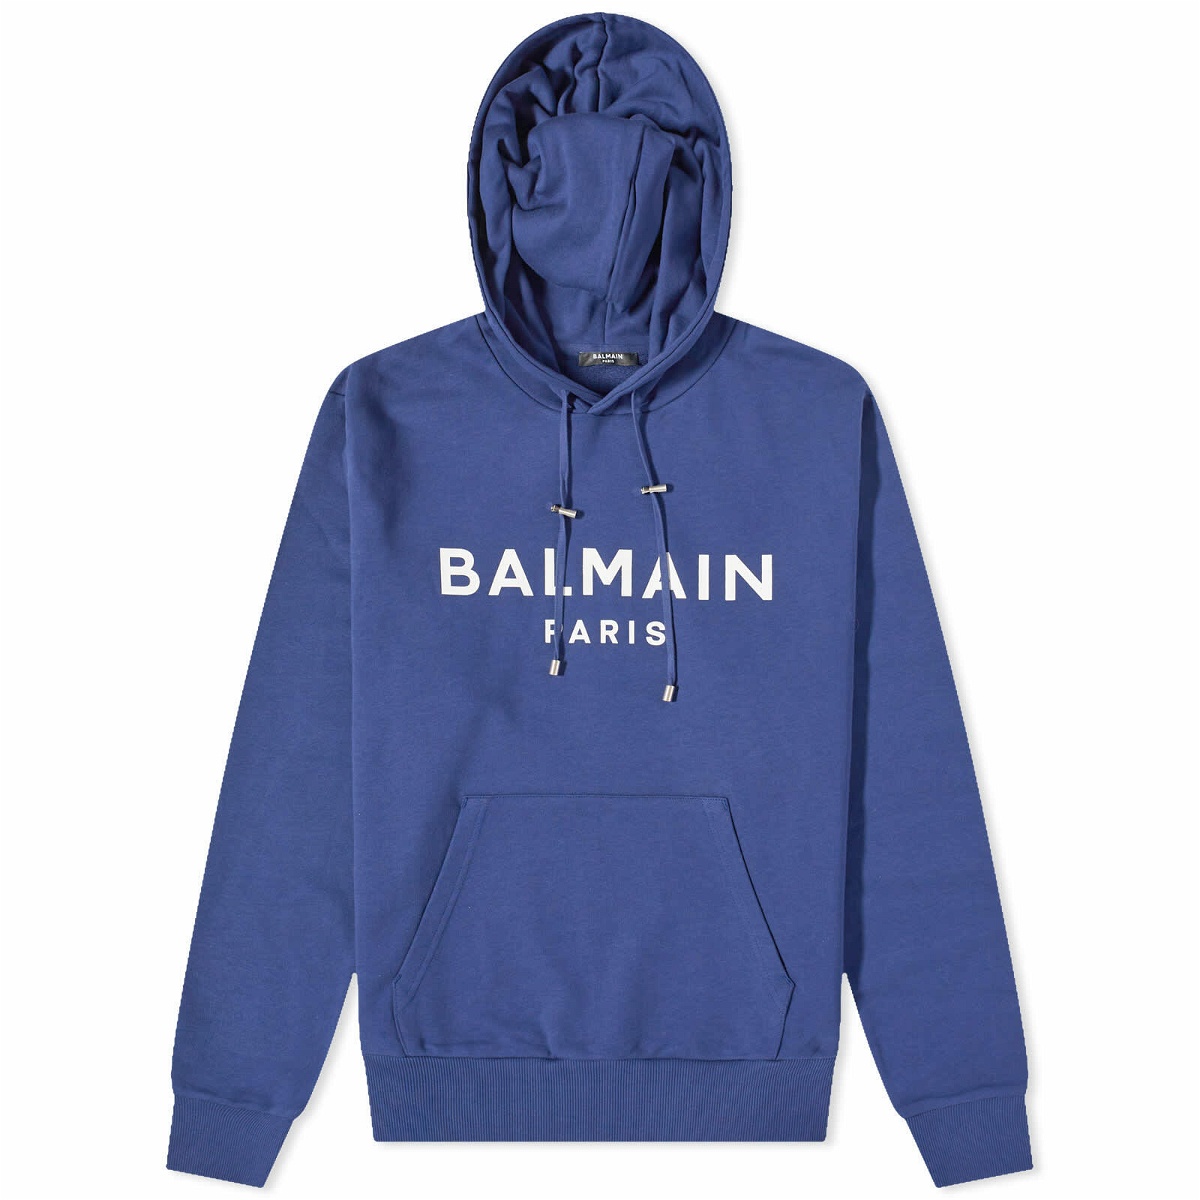 Balmain Men's Paris Logo Hoody in Blue/White Balmain